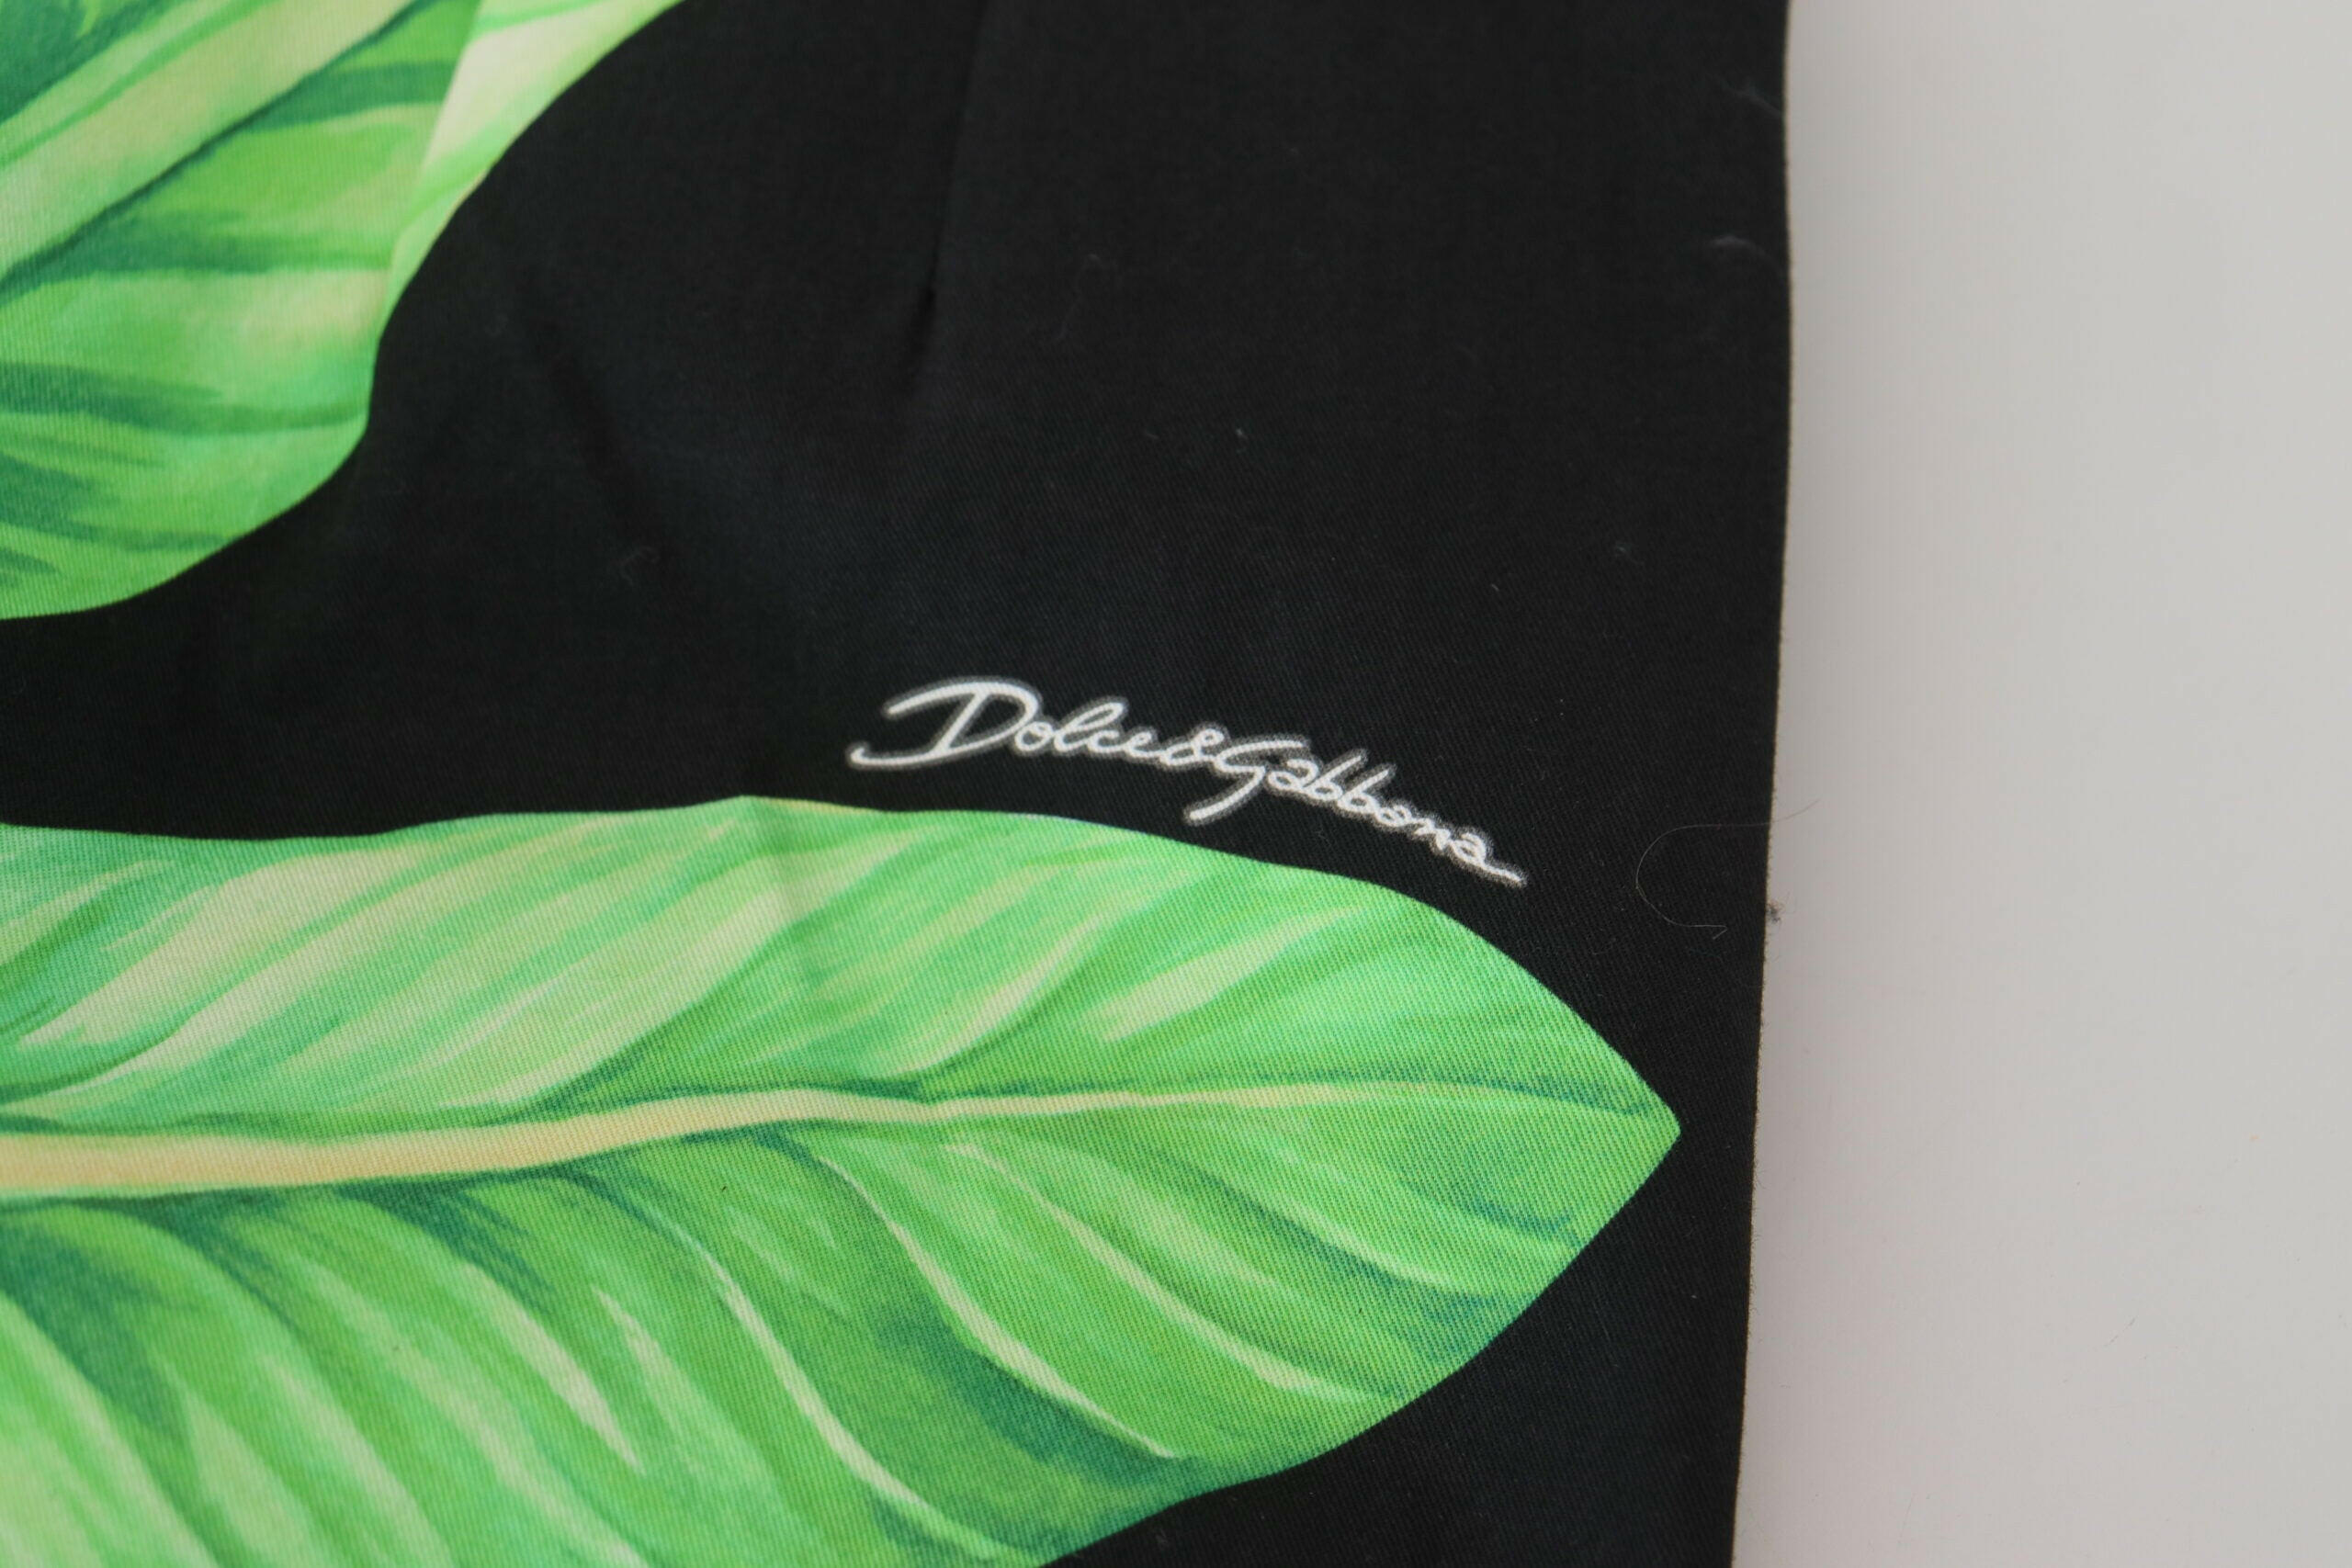 Dolce & Gabbana Black Leaves Print High Waist Hot Pants Shorts - GENUINE AUTHENTIC BRAND LLC  